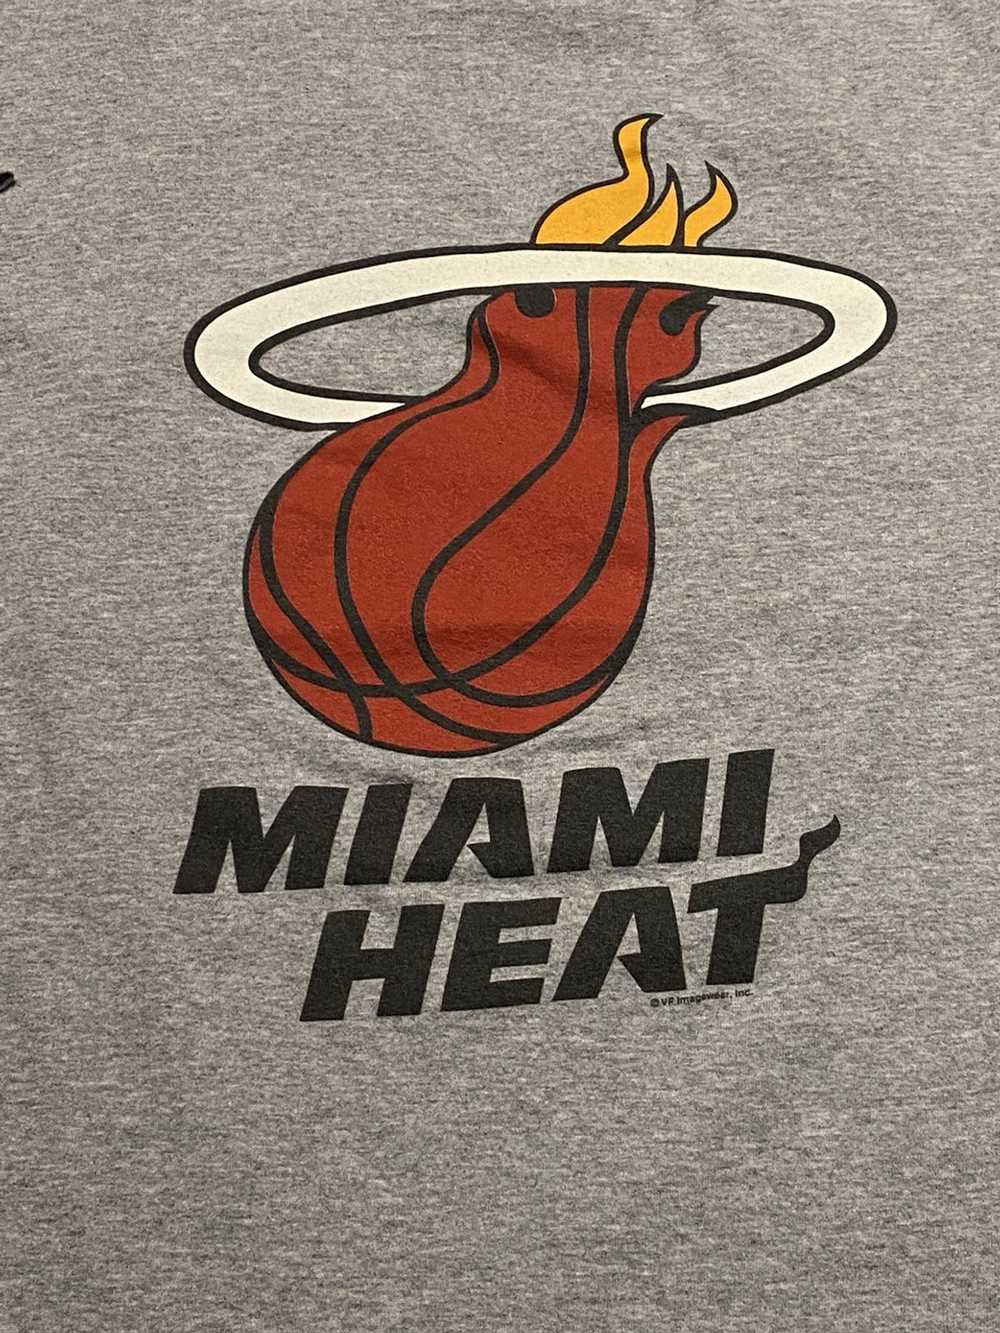 NBA Miami Heat Shaquille O’Neal T-shirt - image 3